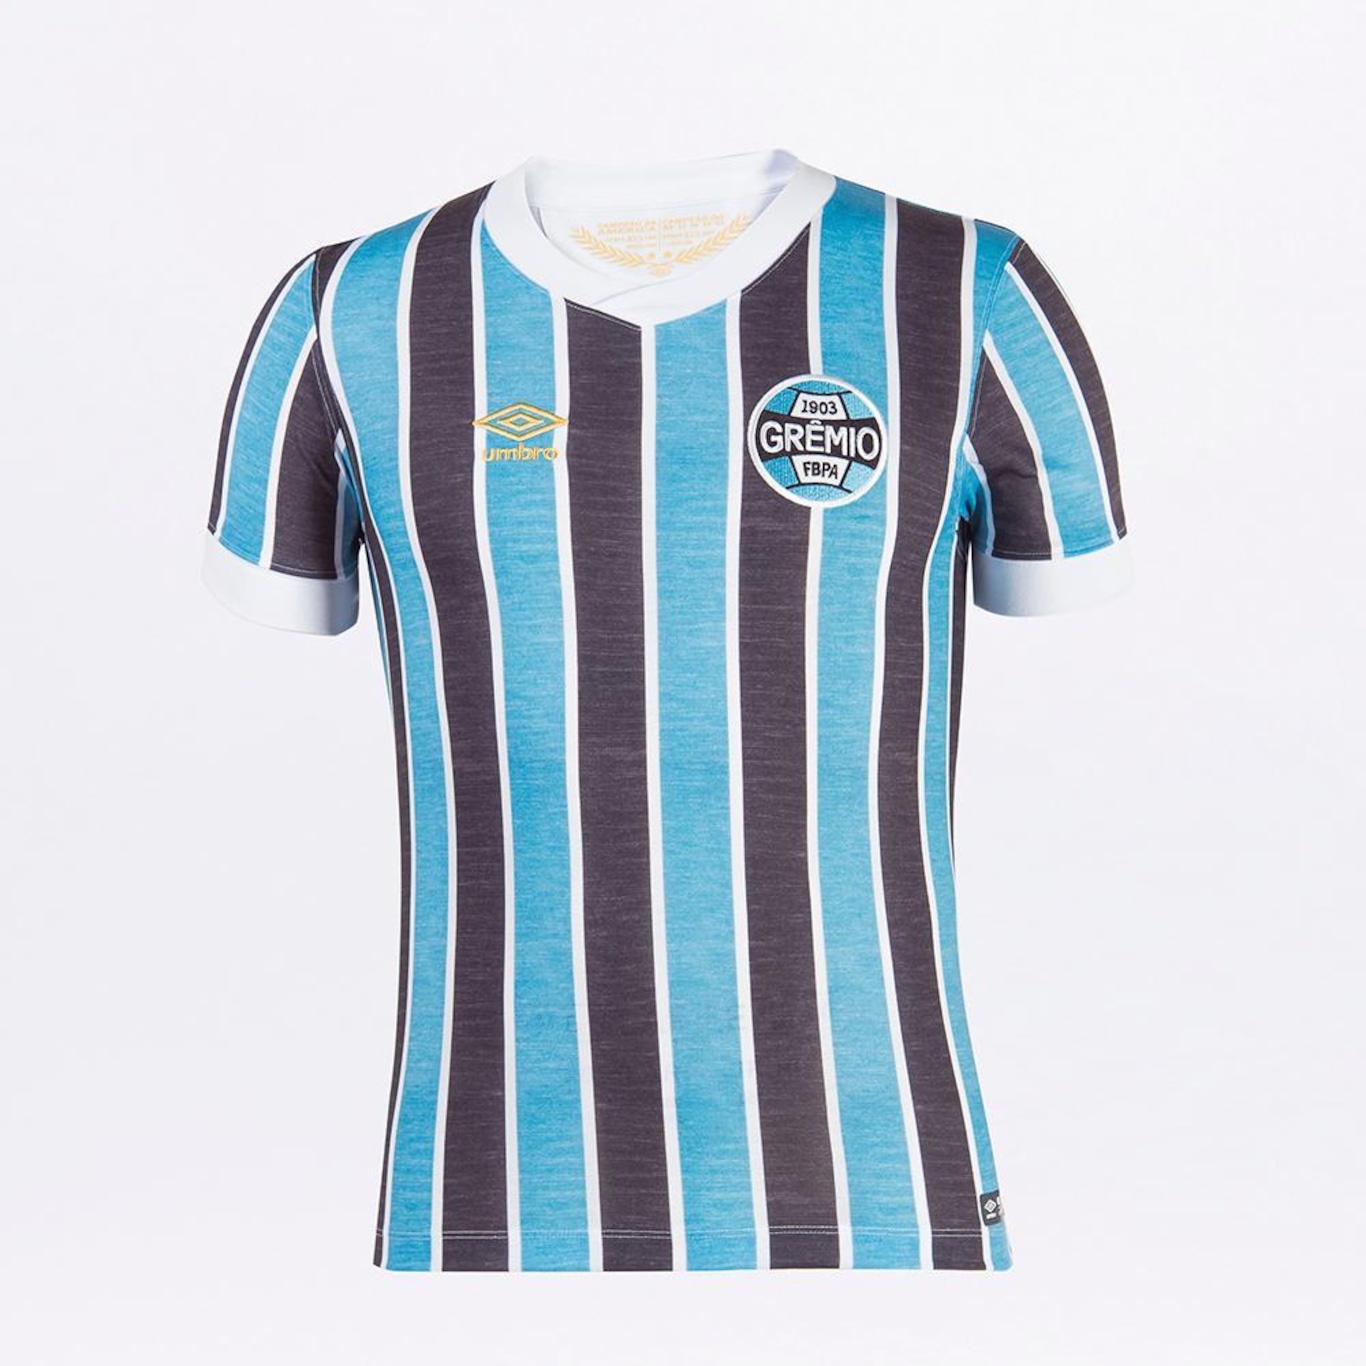 Independiente - Argentina - Camisa Original - Centenario, Camisa Masculina  Umbro Usado 88378357